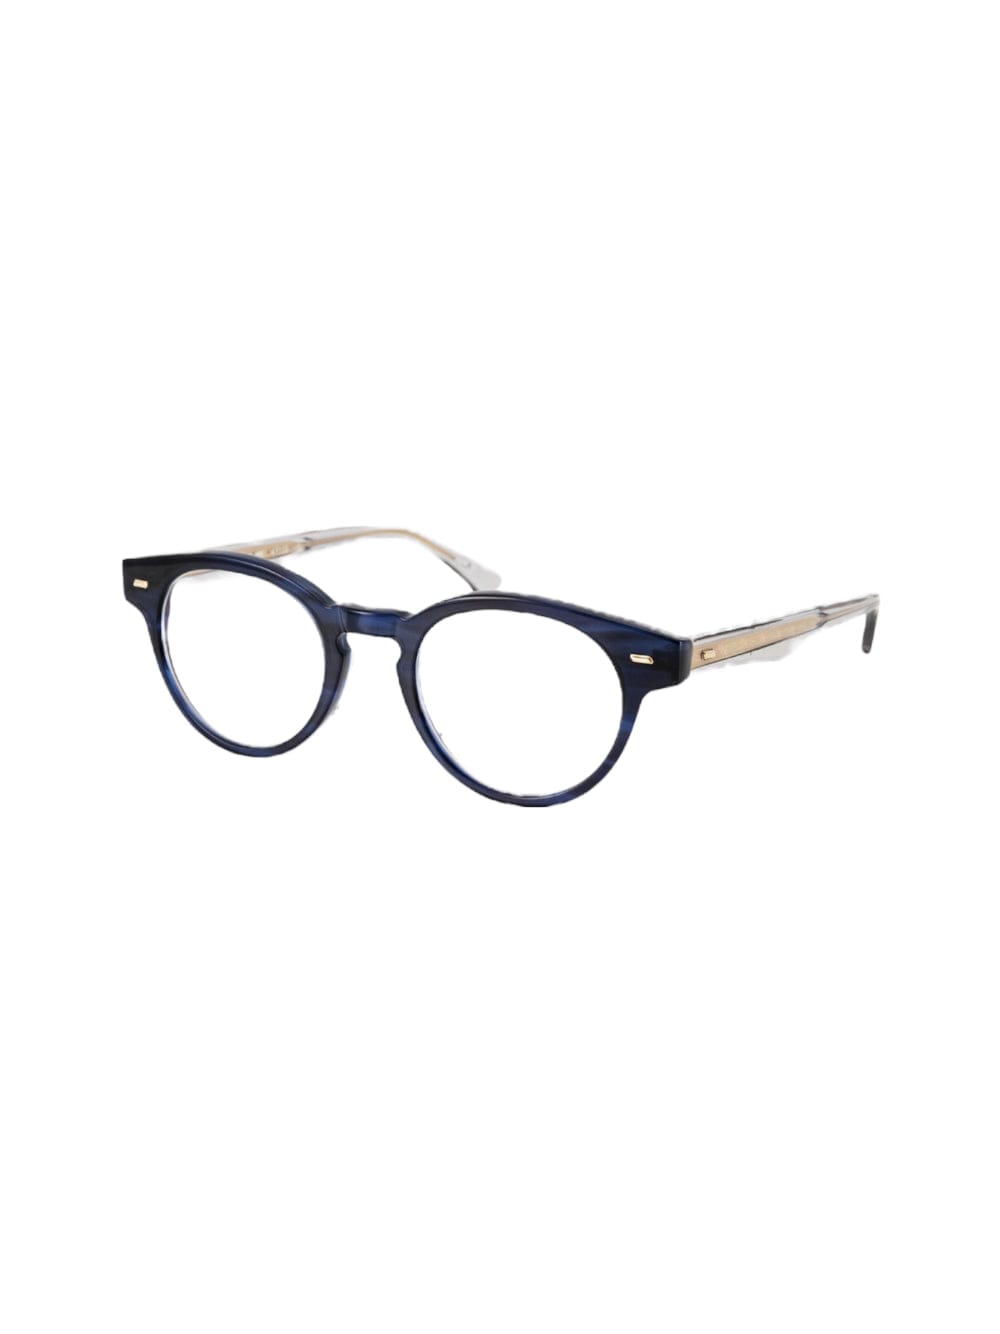 Masunaga 064 - Blue Navy Glasses